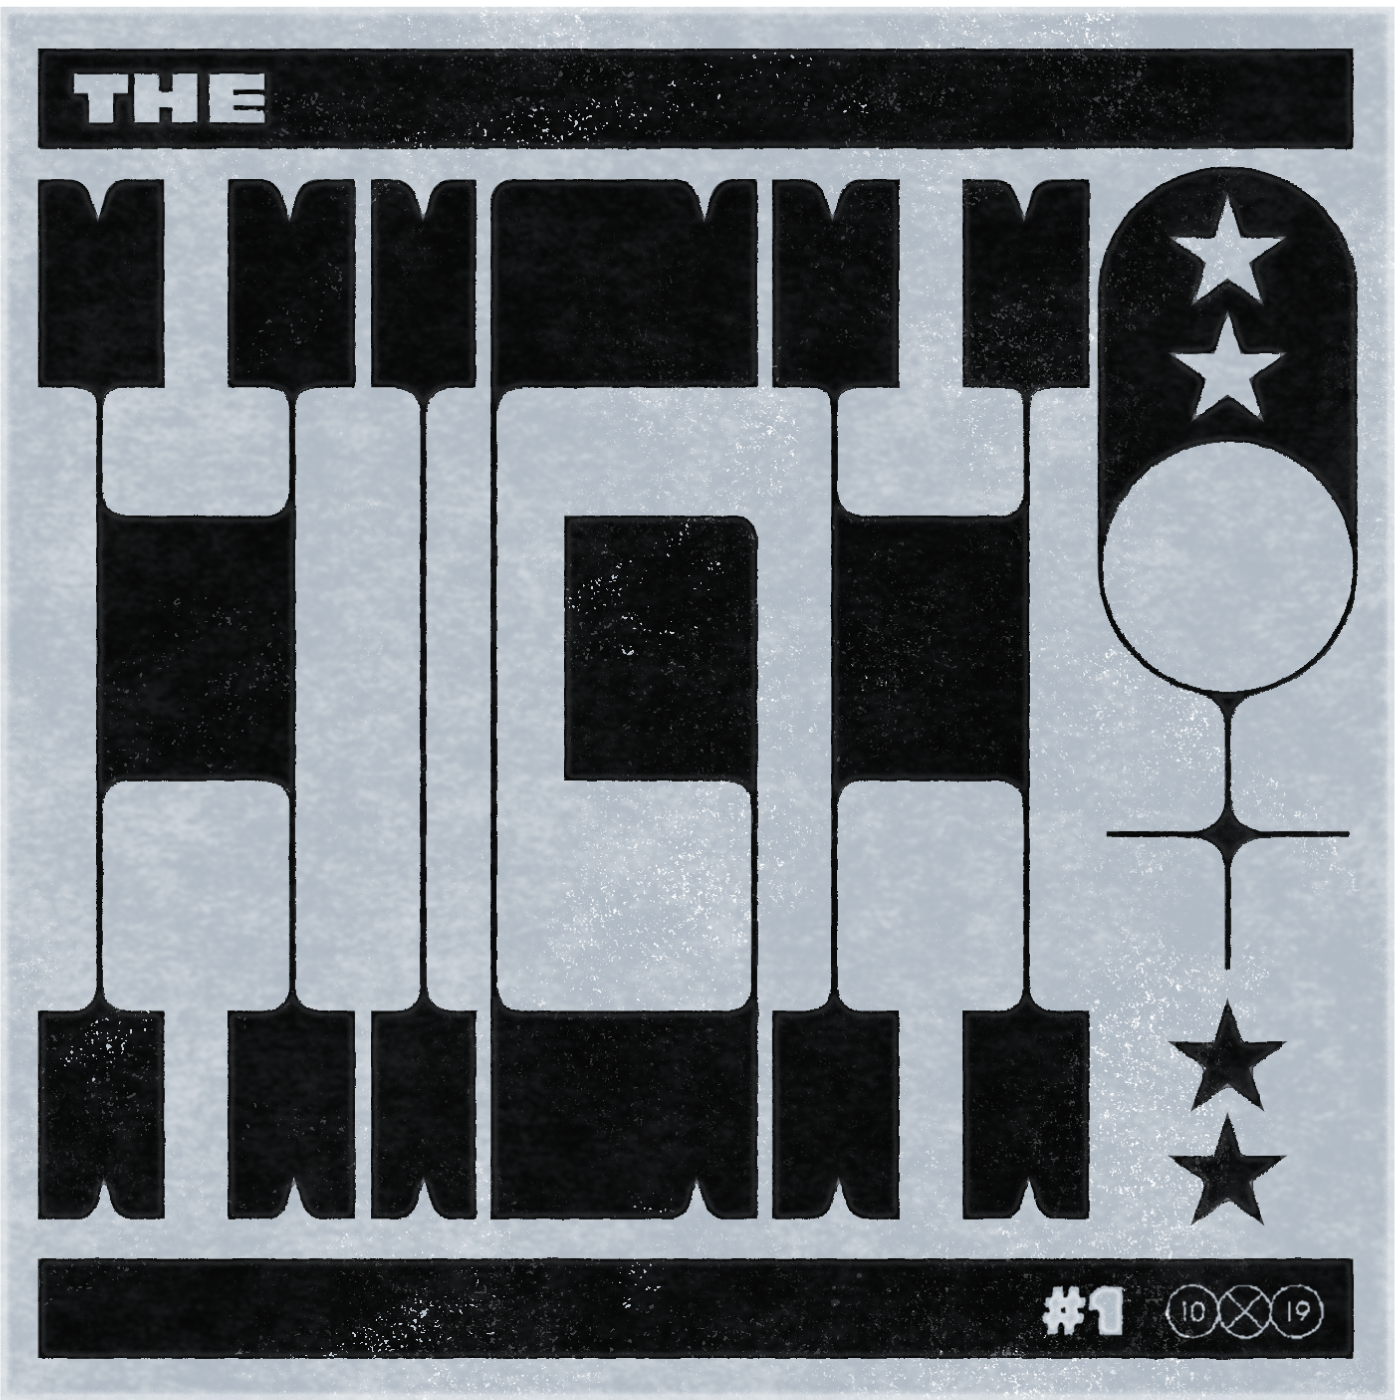 The Highwomen album cover by Jen Hood for 10x19